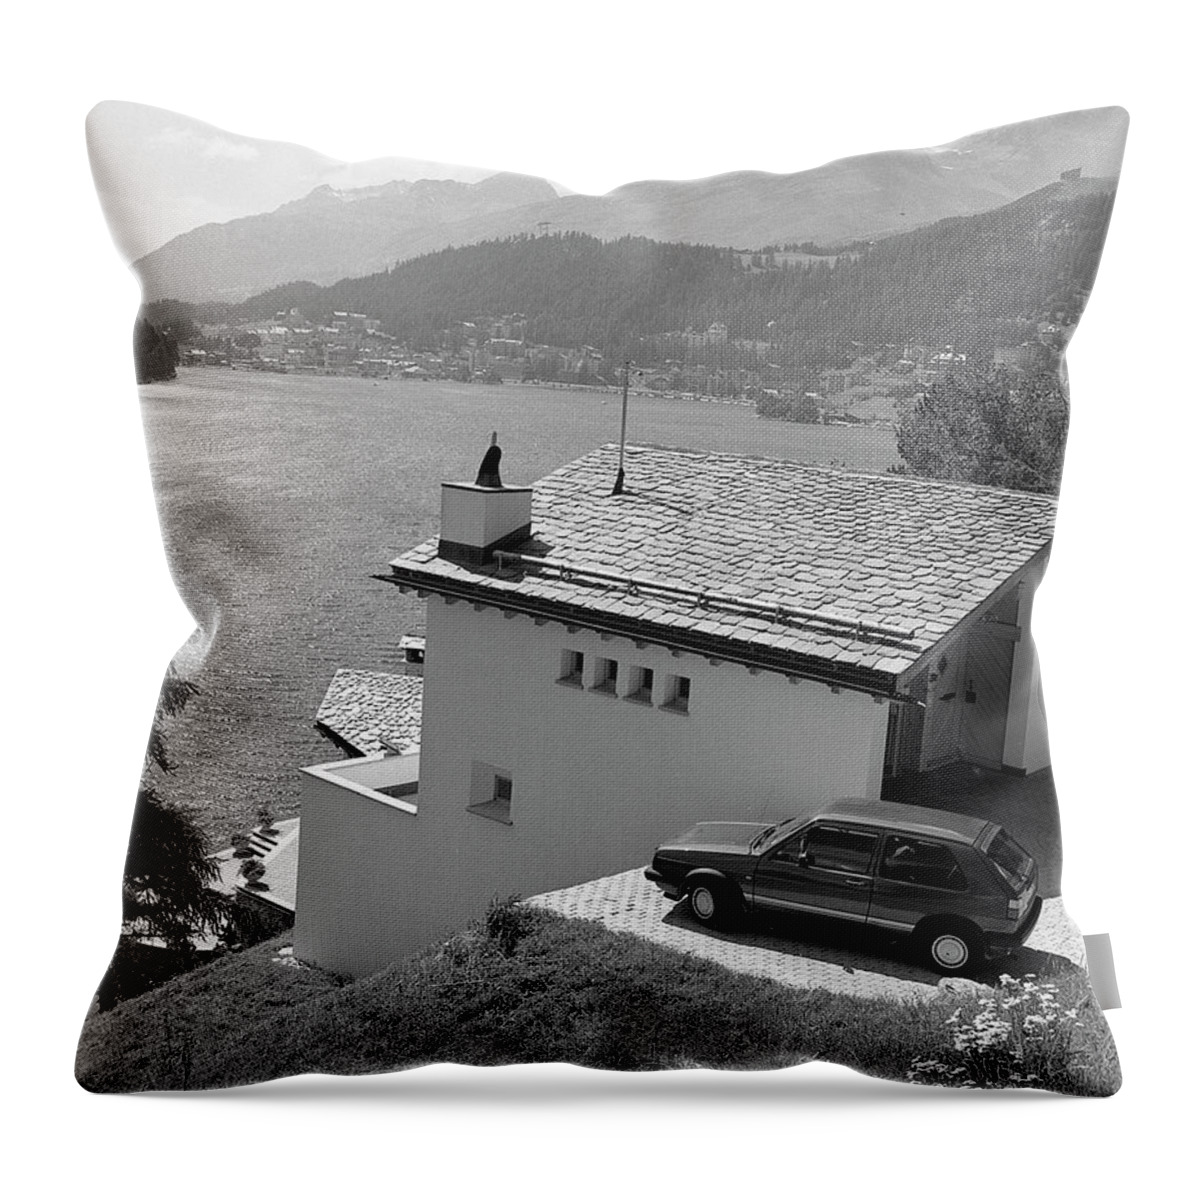 St Moritz Throw Pillow featuring the photograph St Moritz by Jim Mathis